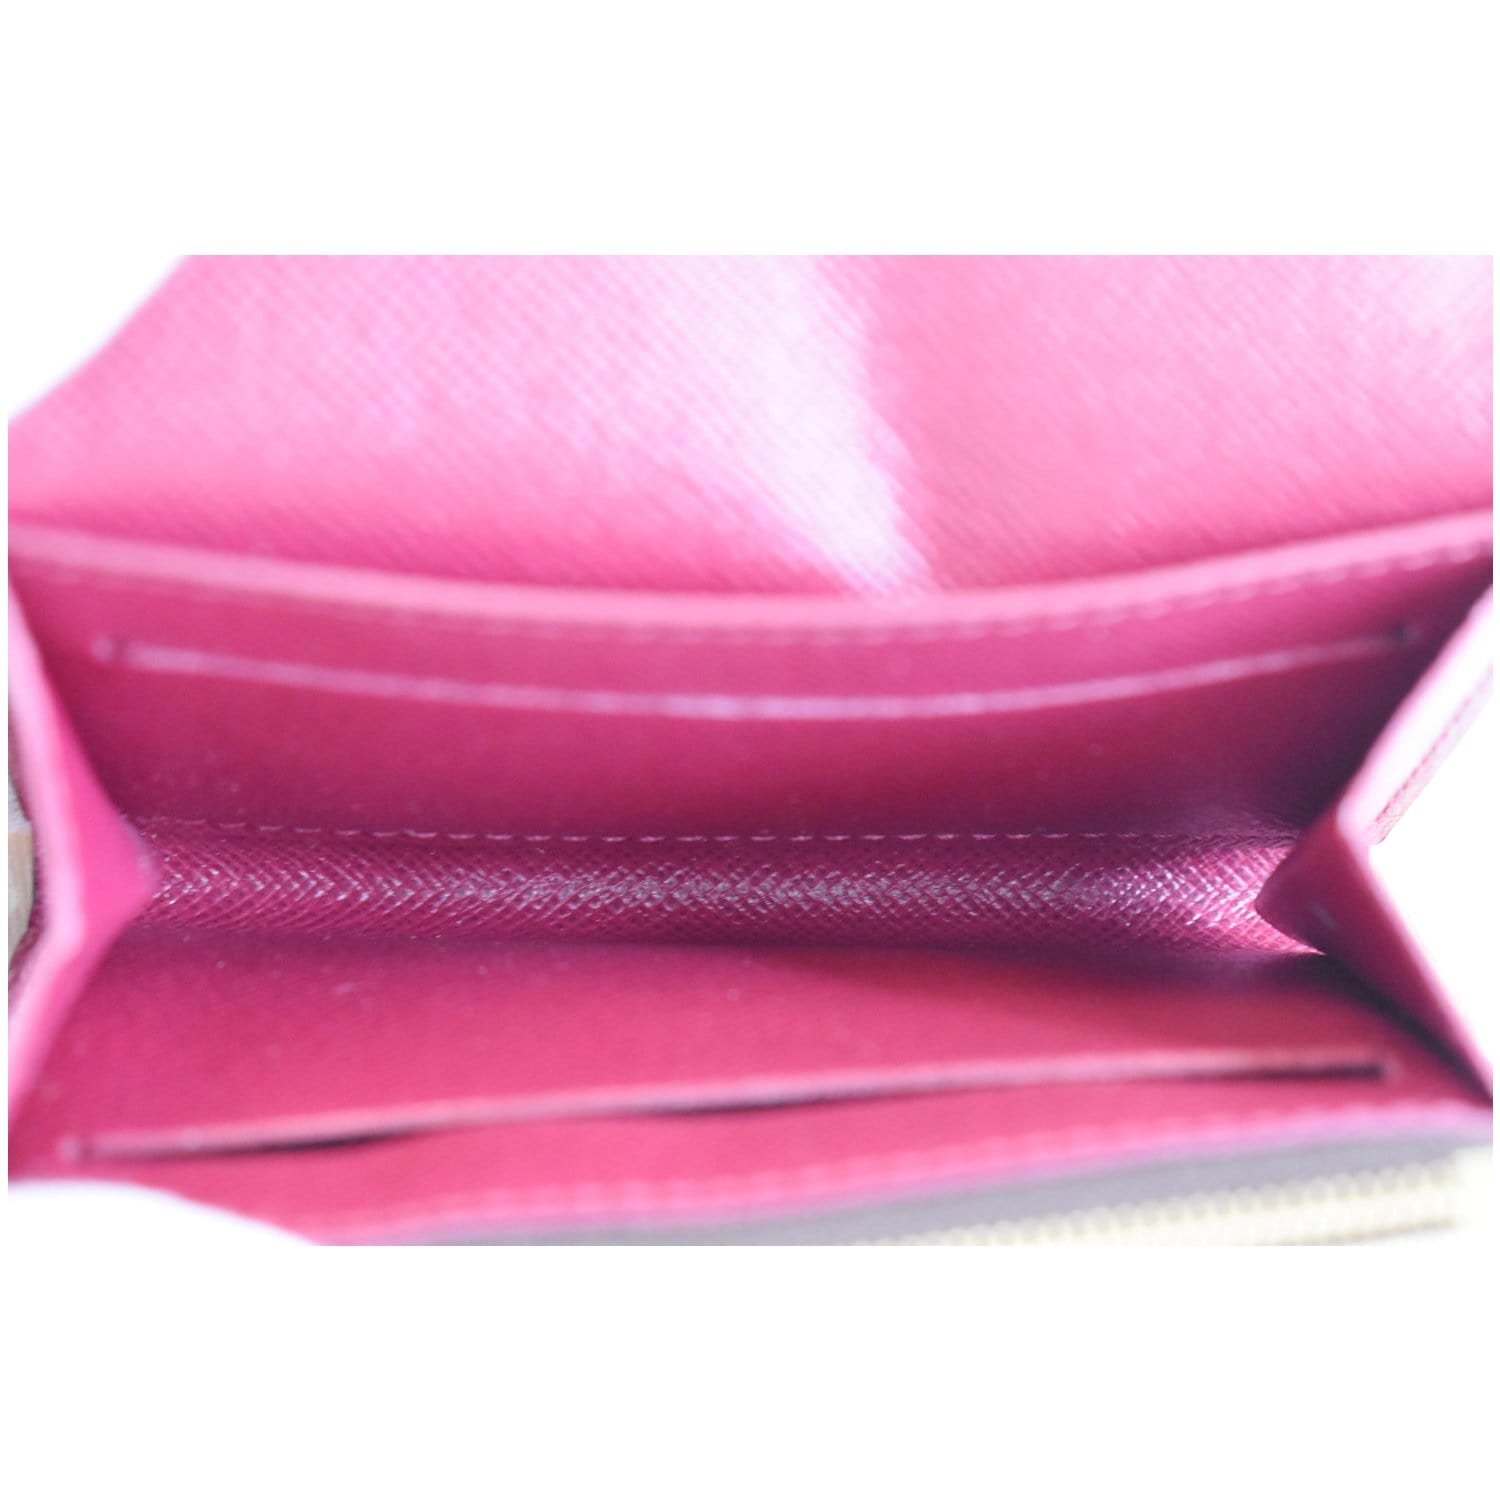 pink lv coin purse